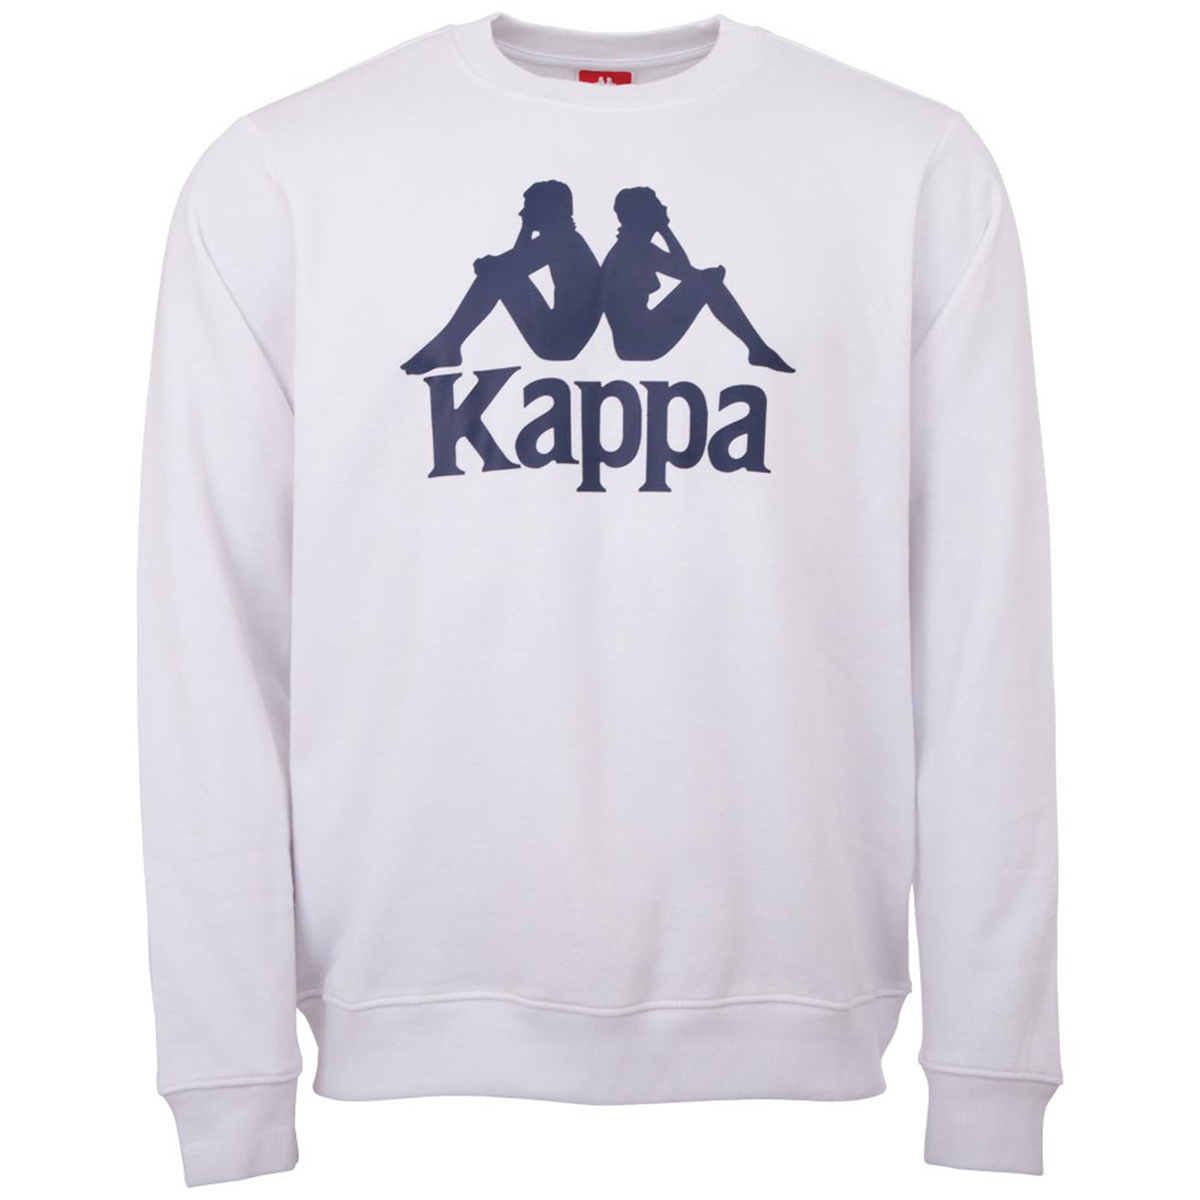 Kappa Herren Sweatshirt weiss 703797 001 von Kappa